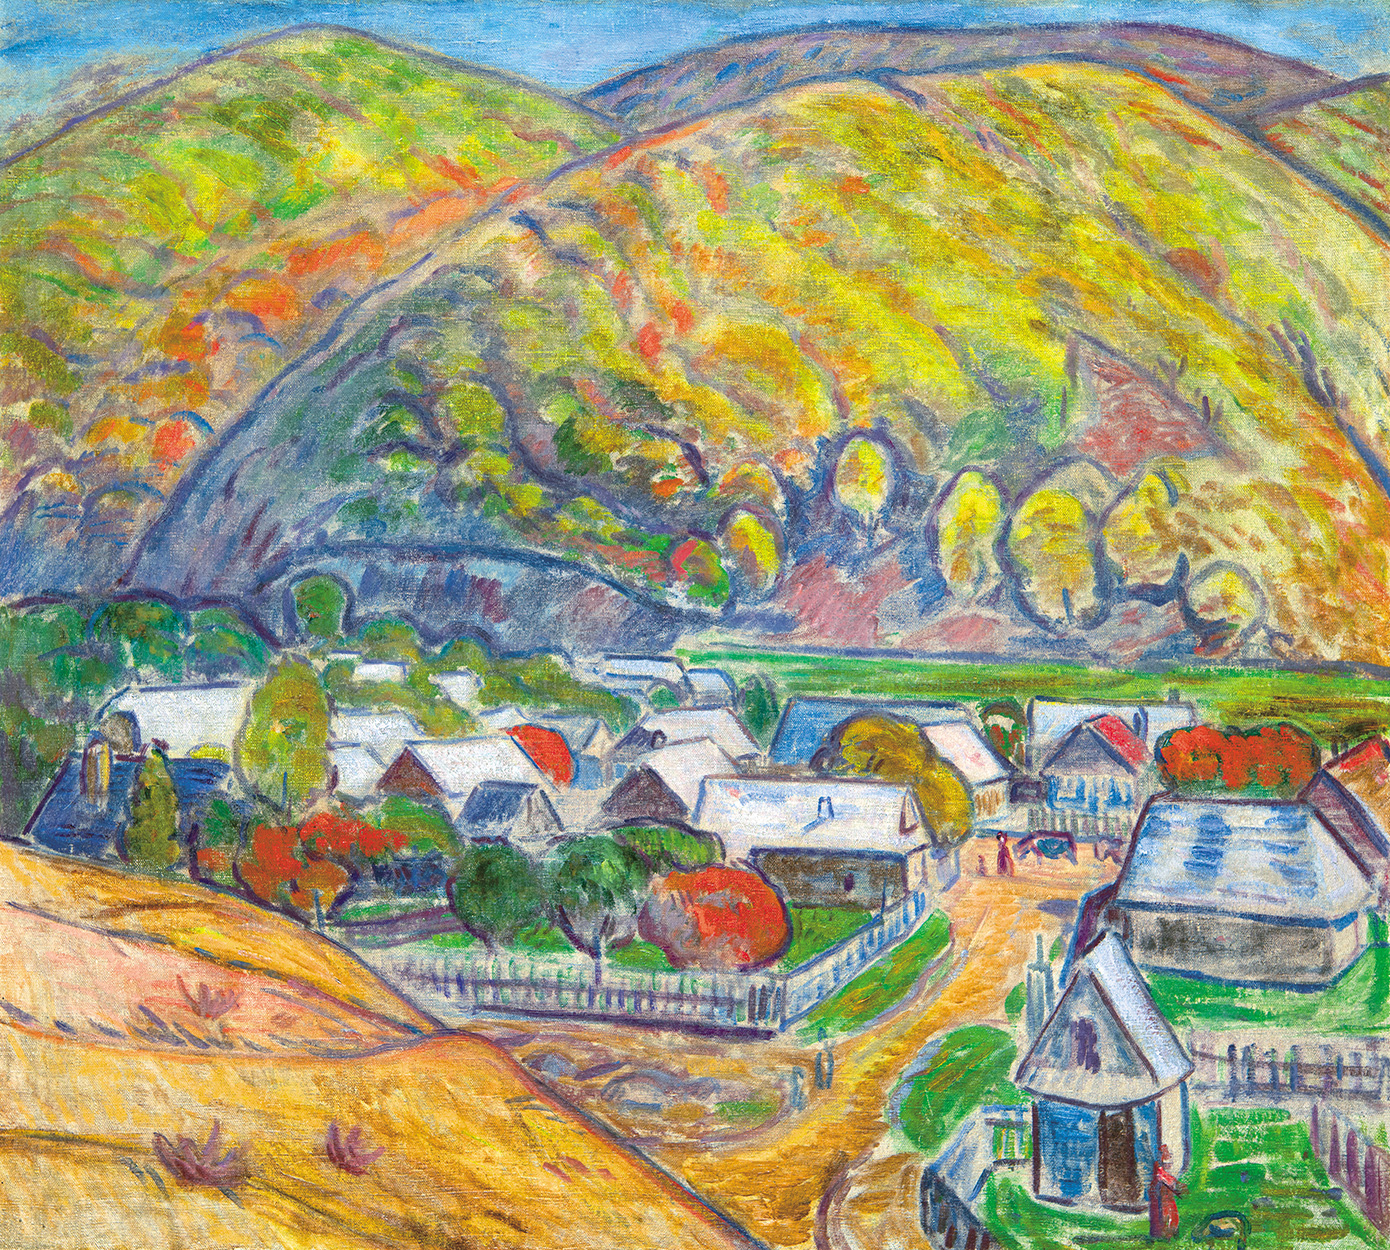 Iványi Grünwald Béla (1867-1940) Colorful Baia Mare (View of Baia Mare), 1908